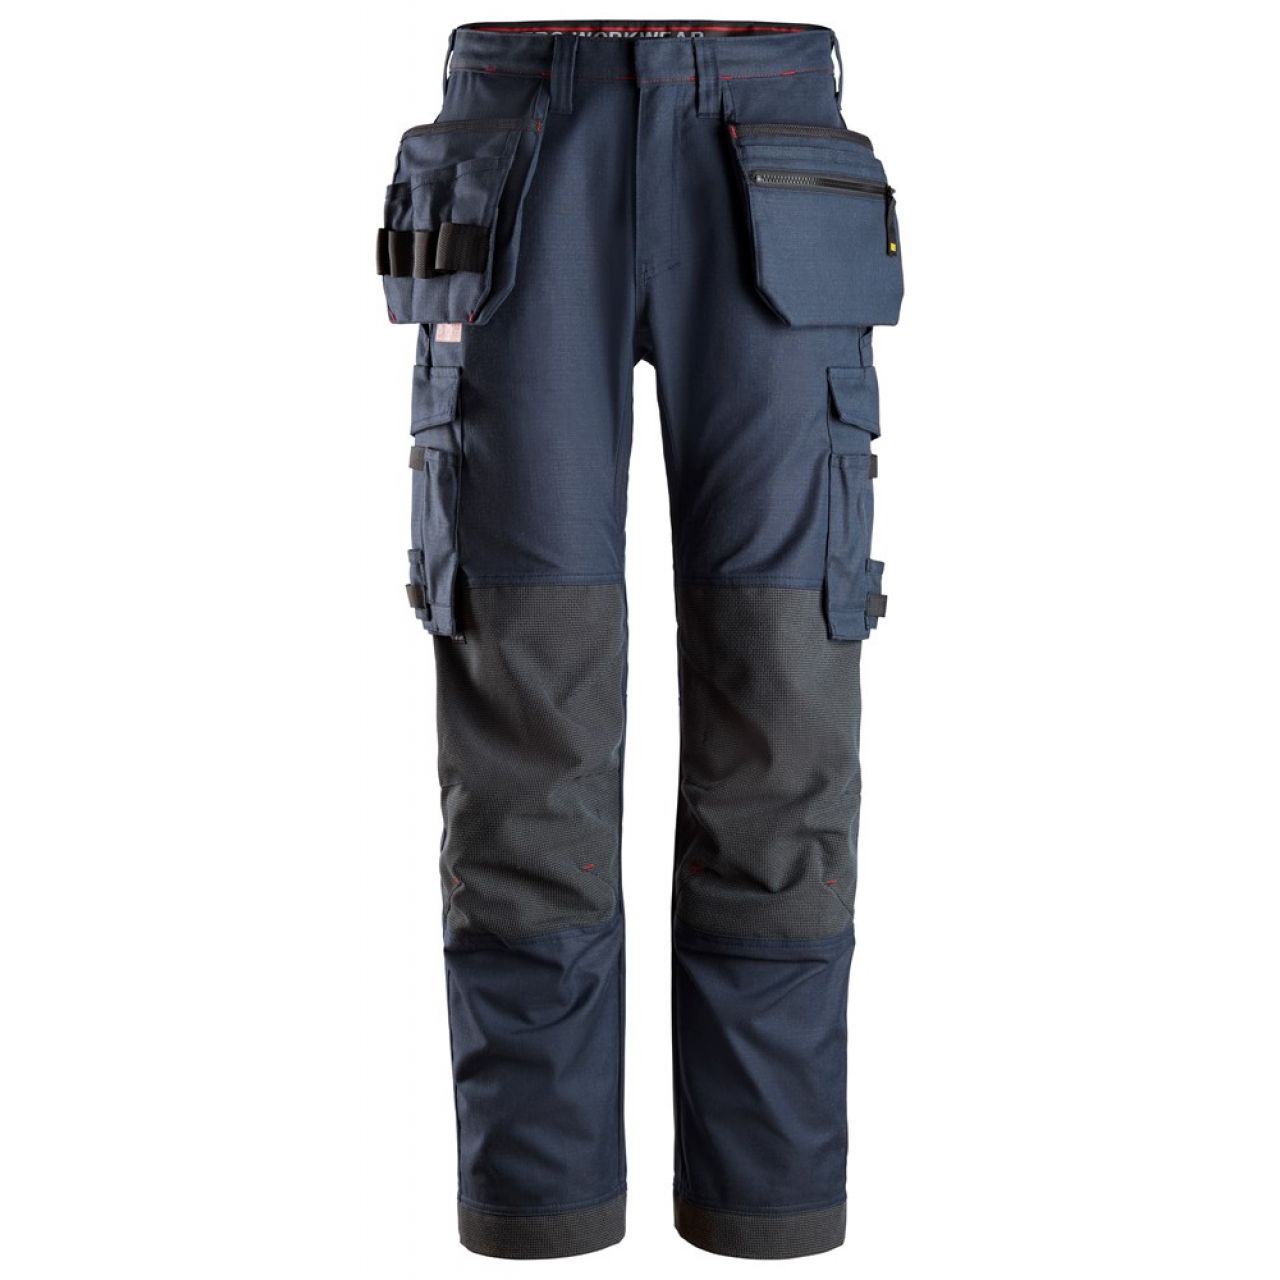 6262 Pantalones largos de trabajo con bolsillos flotantes simétricos ProtecWork azul marino talla 100